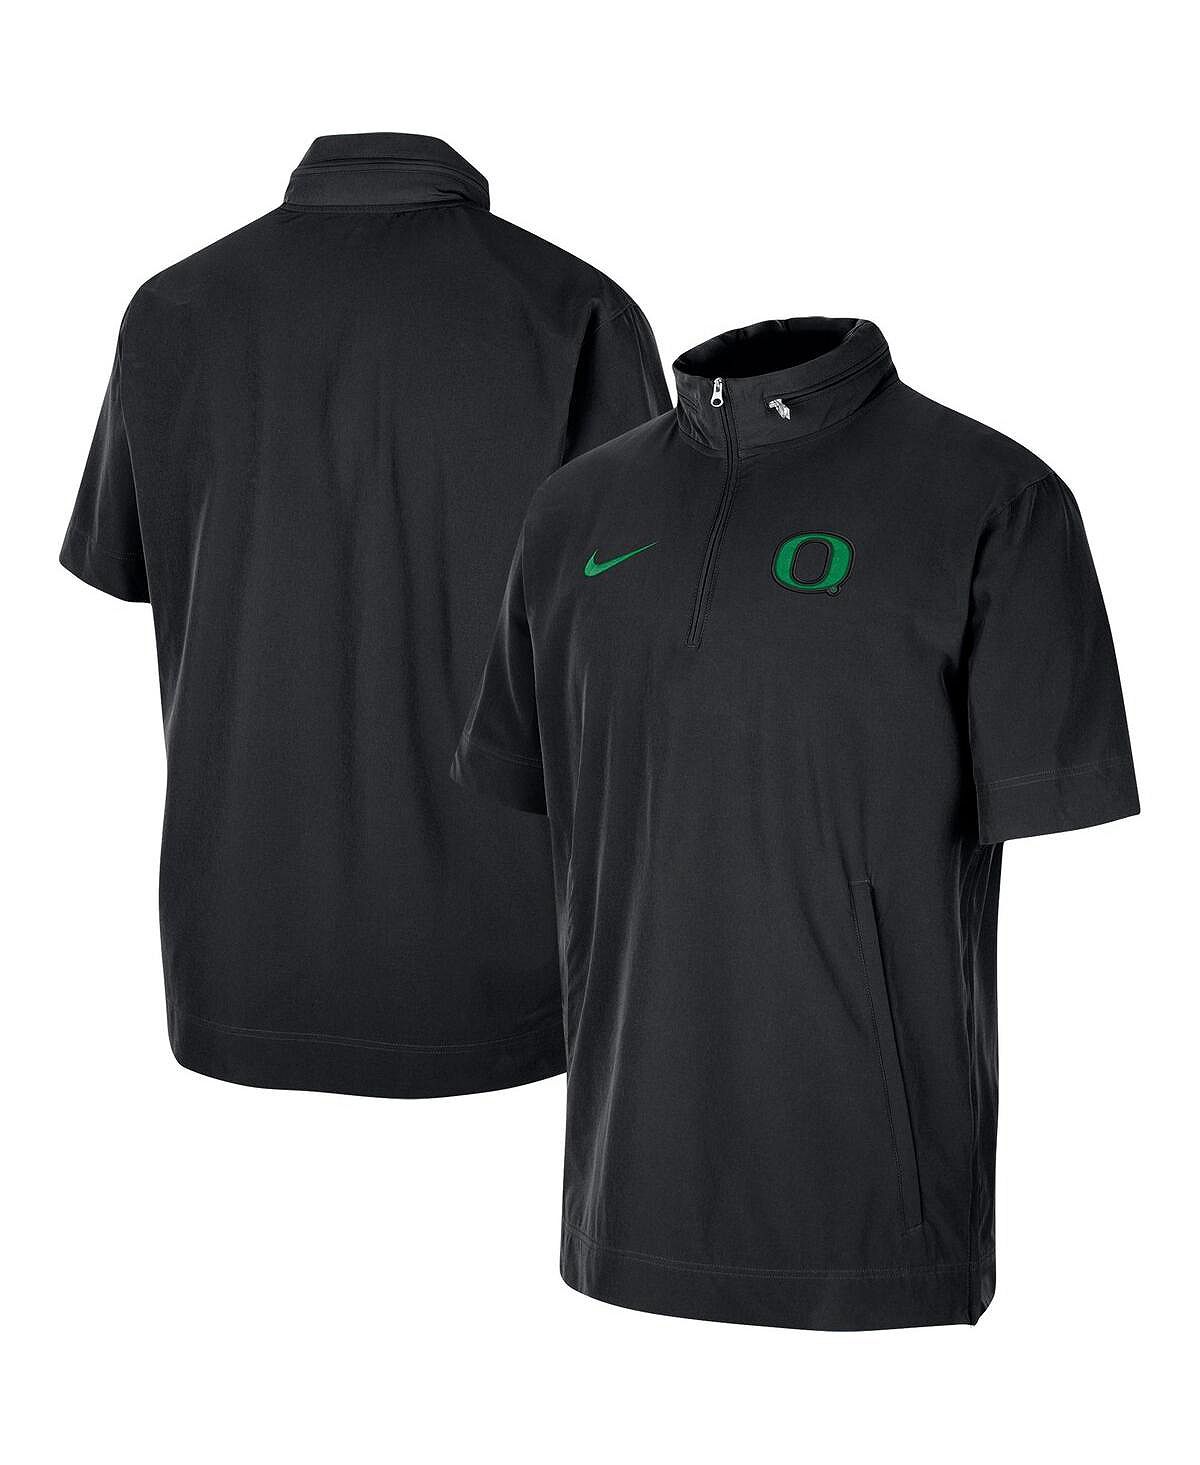 Мужская черная куртка с короткими рукавами и молнией до половины Oregon Ducks Coaches Nike